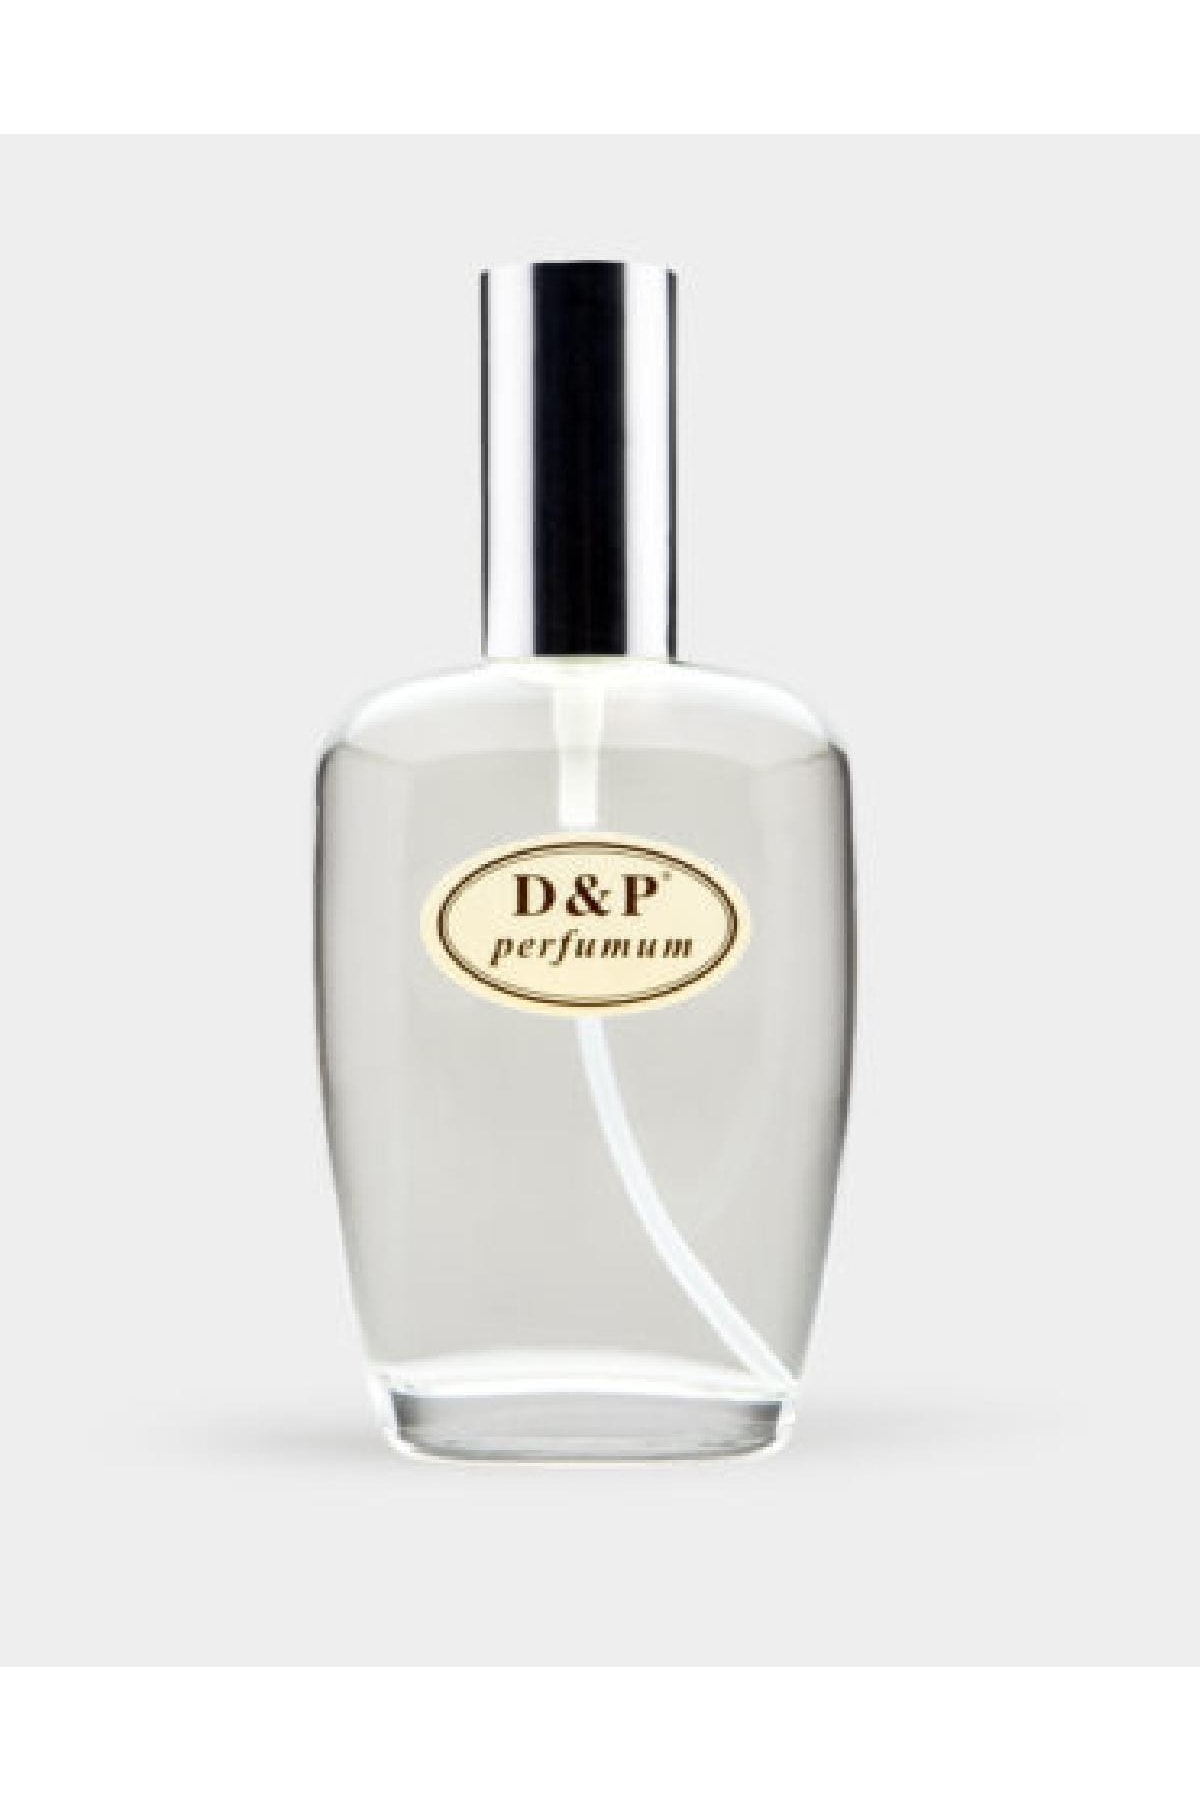 D&P Perfumum D19 Erkek Parfüm Edp 100 ml